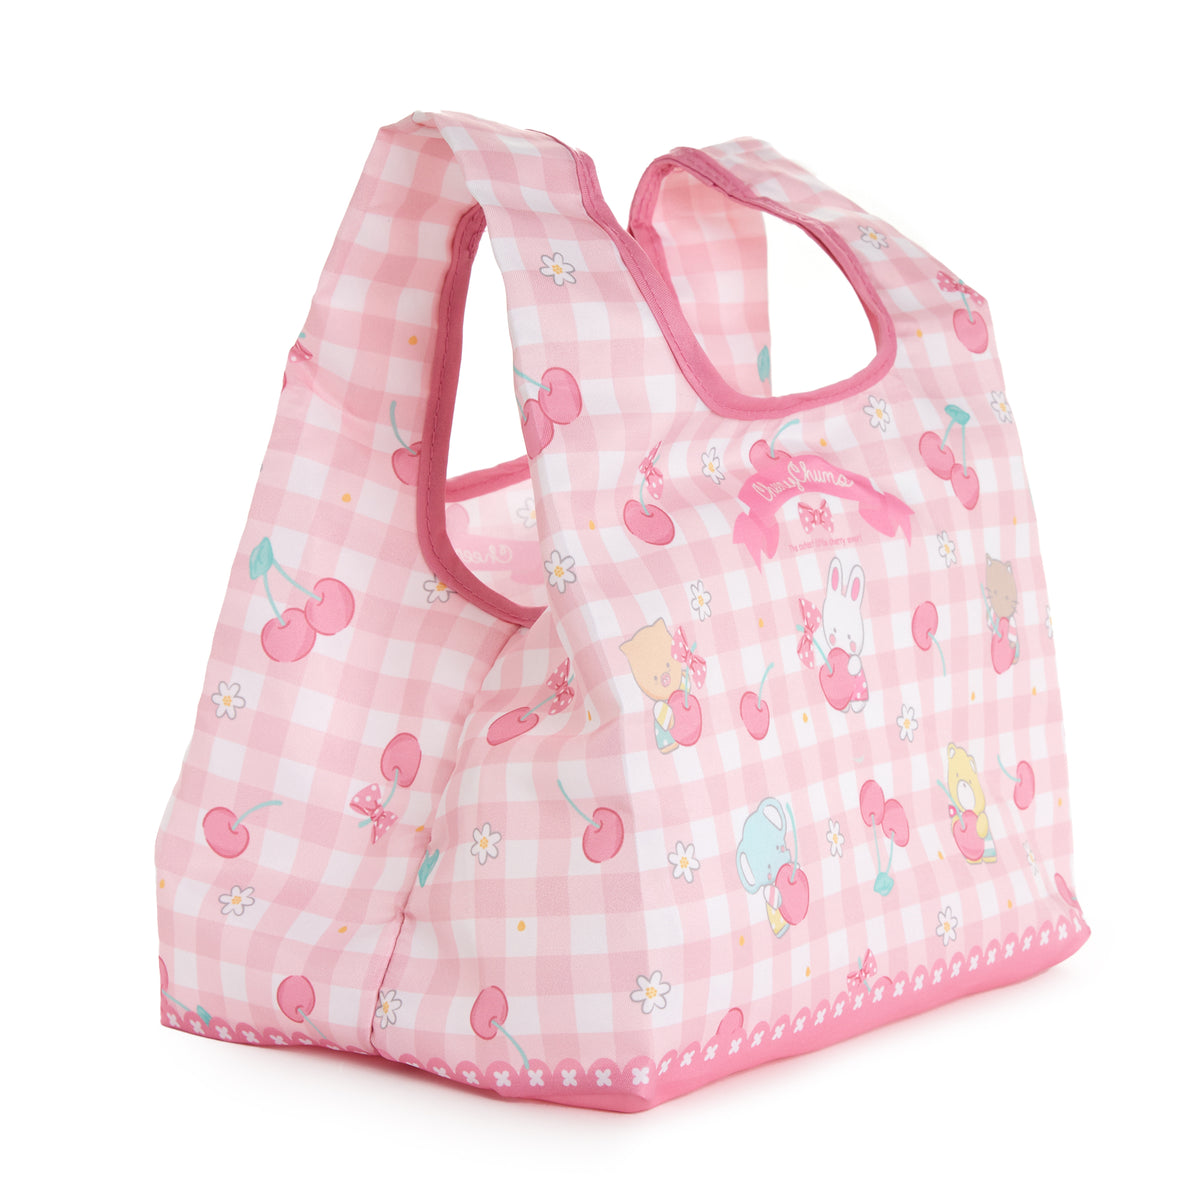 Cheery Chums Reusable Tote Bag Bags Global Original   